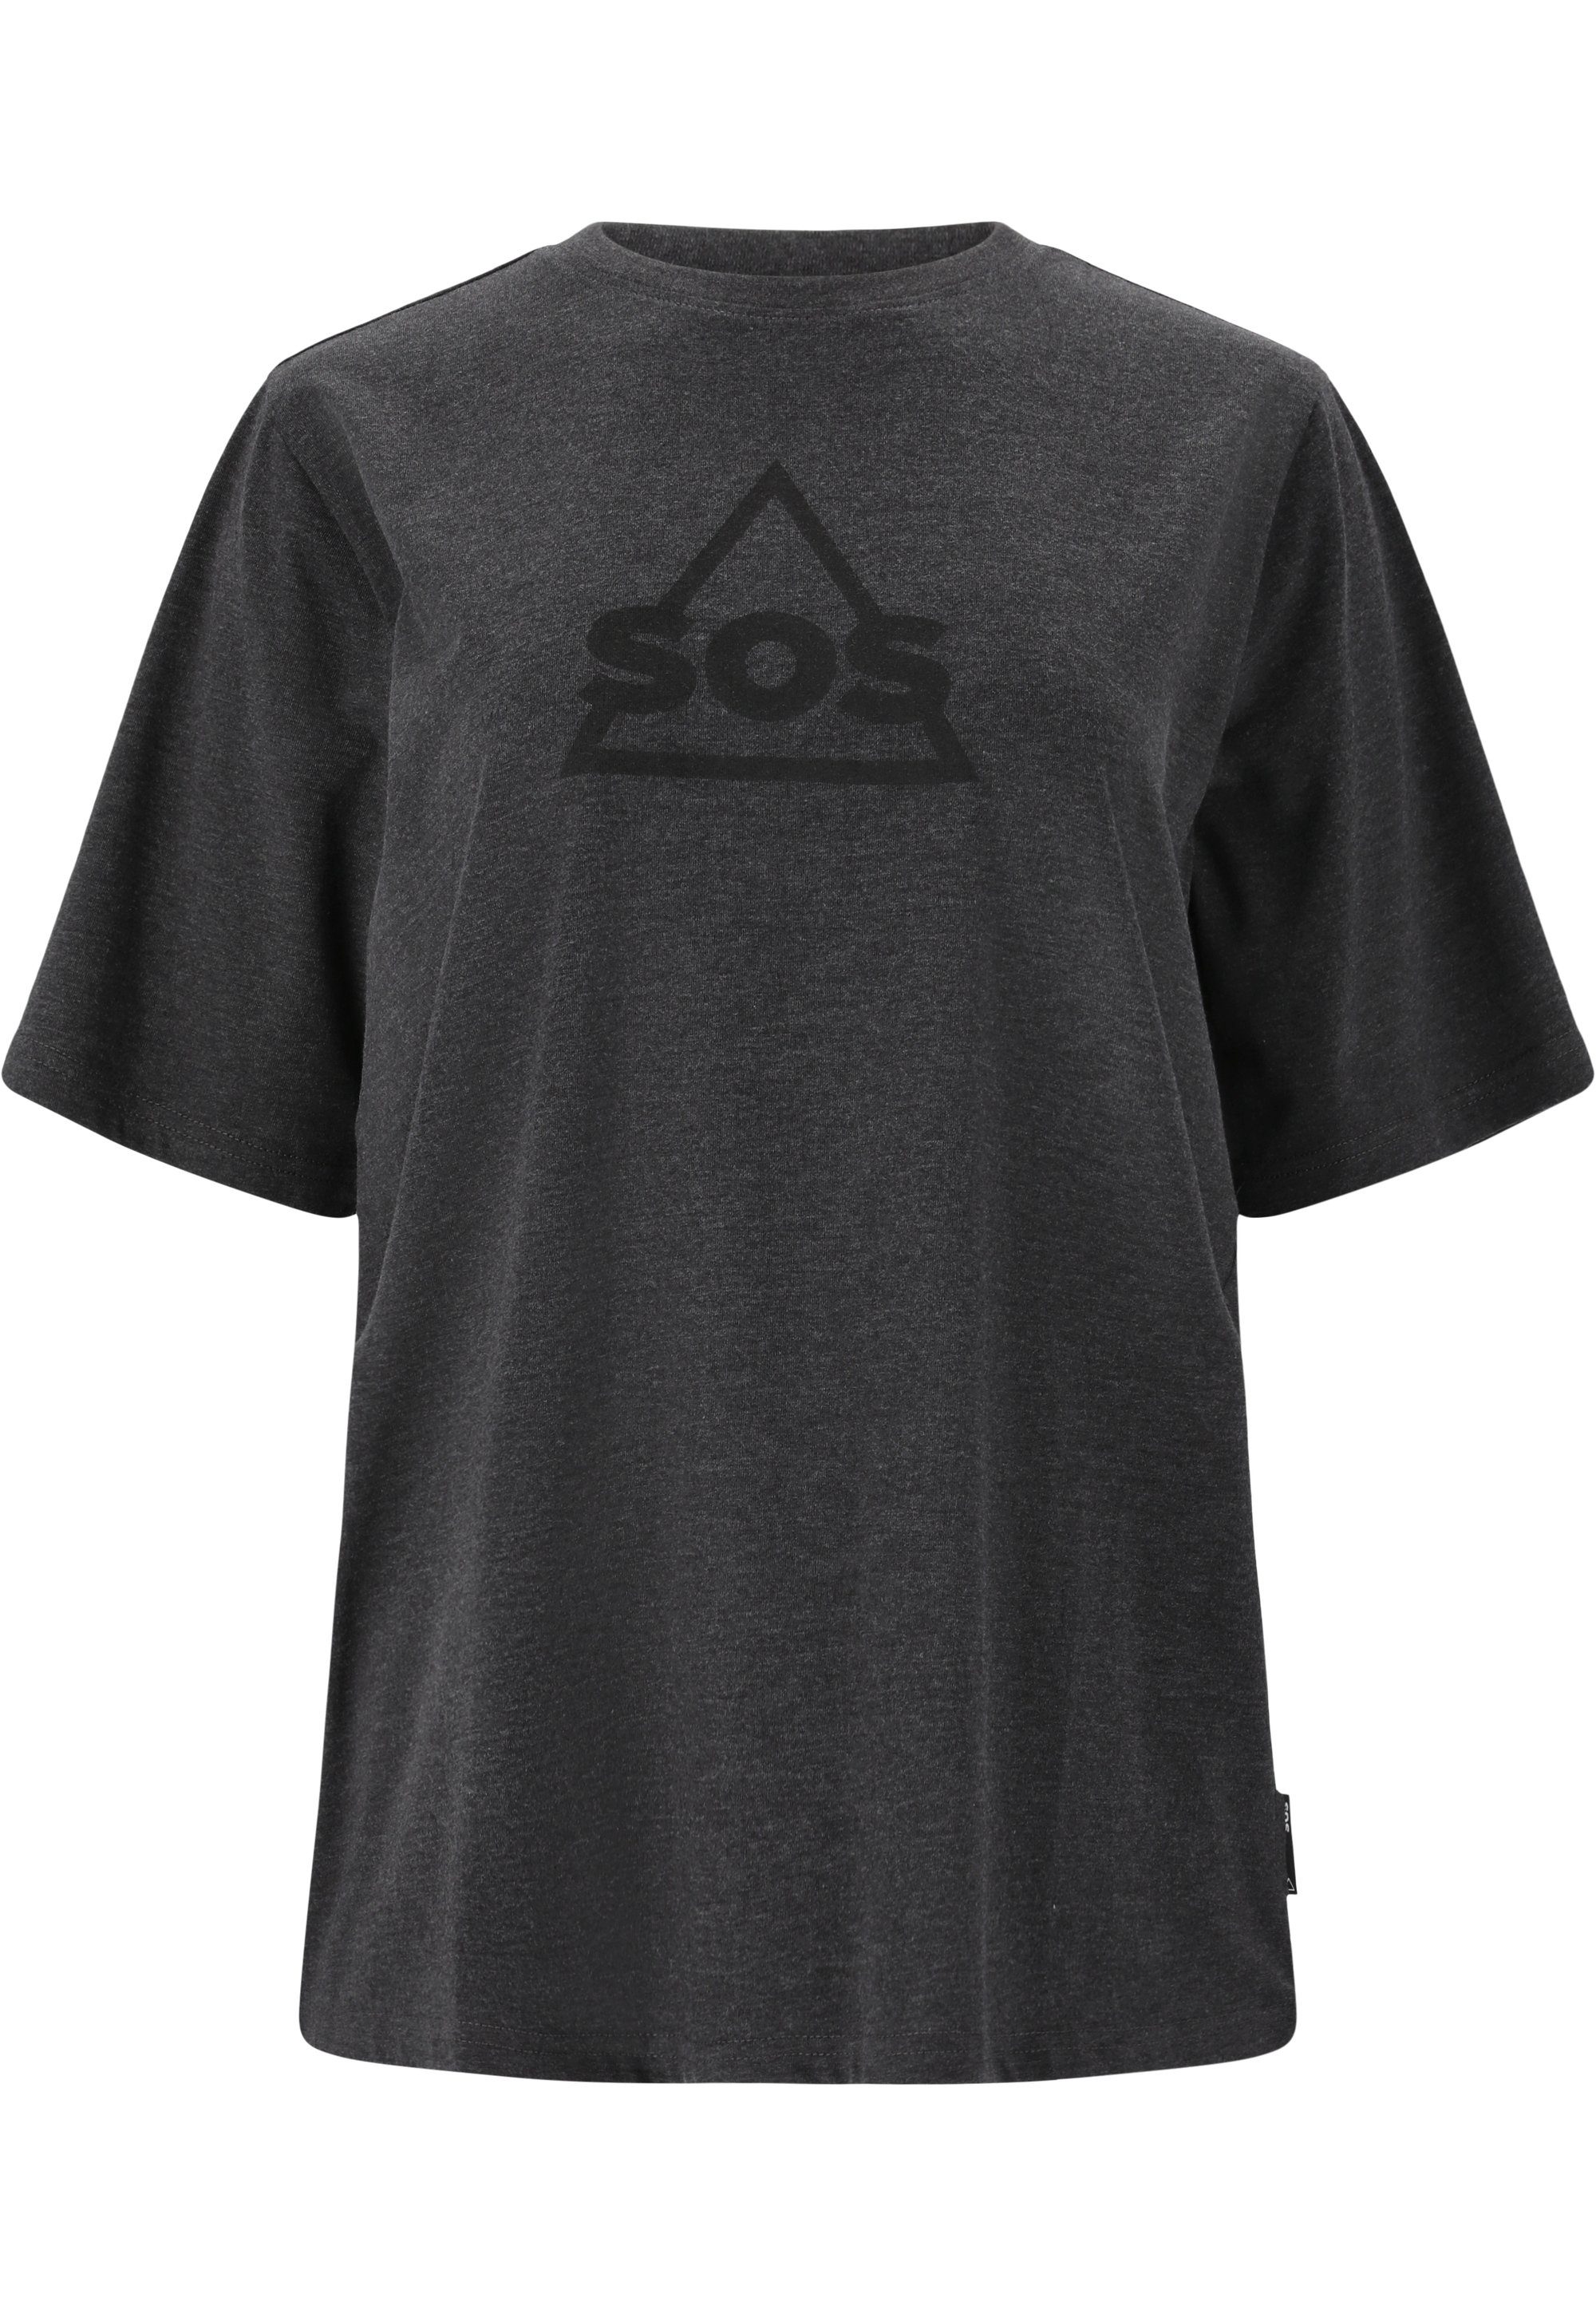 mit auf trendigem SOS Markenlogo Kvitfjell dunkelgrau der Funktionsshirt Front